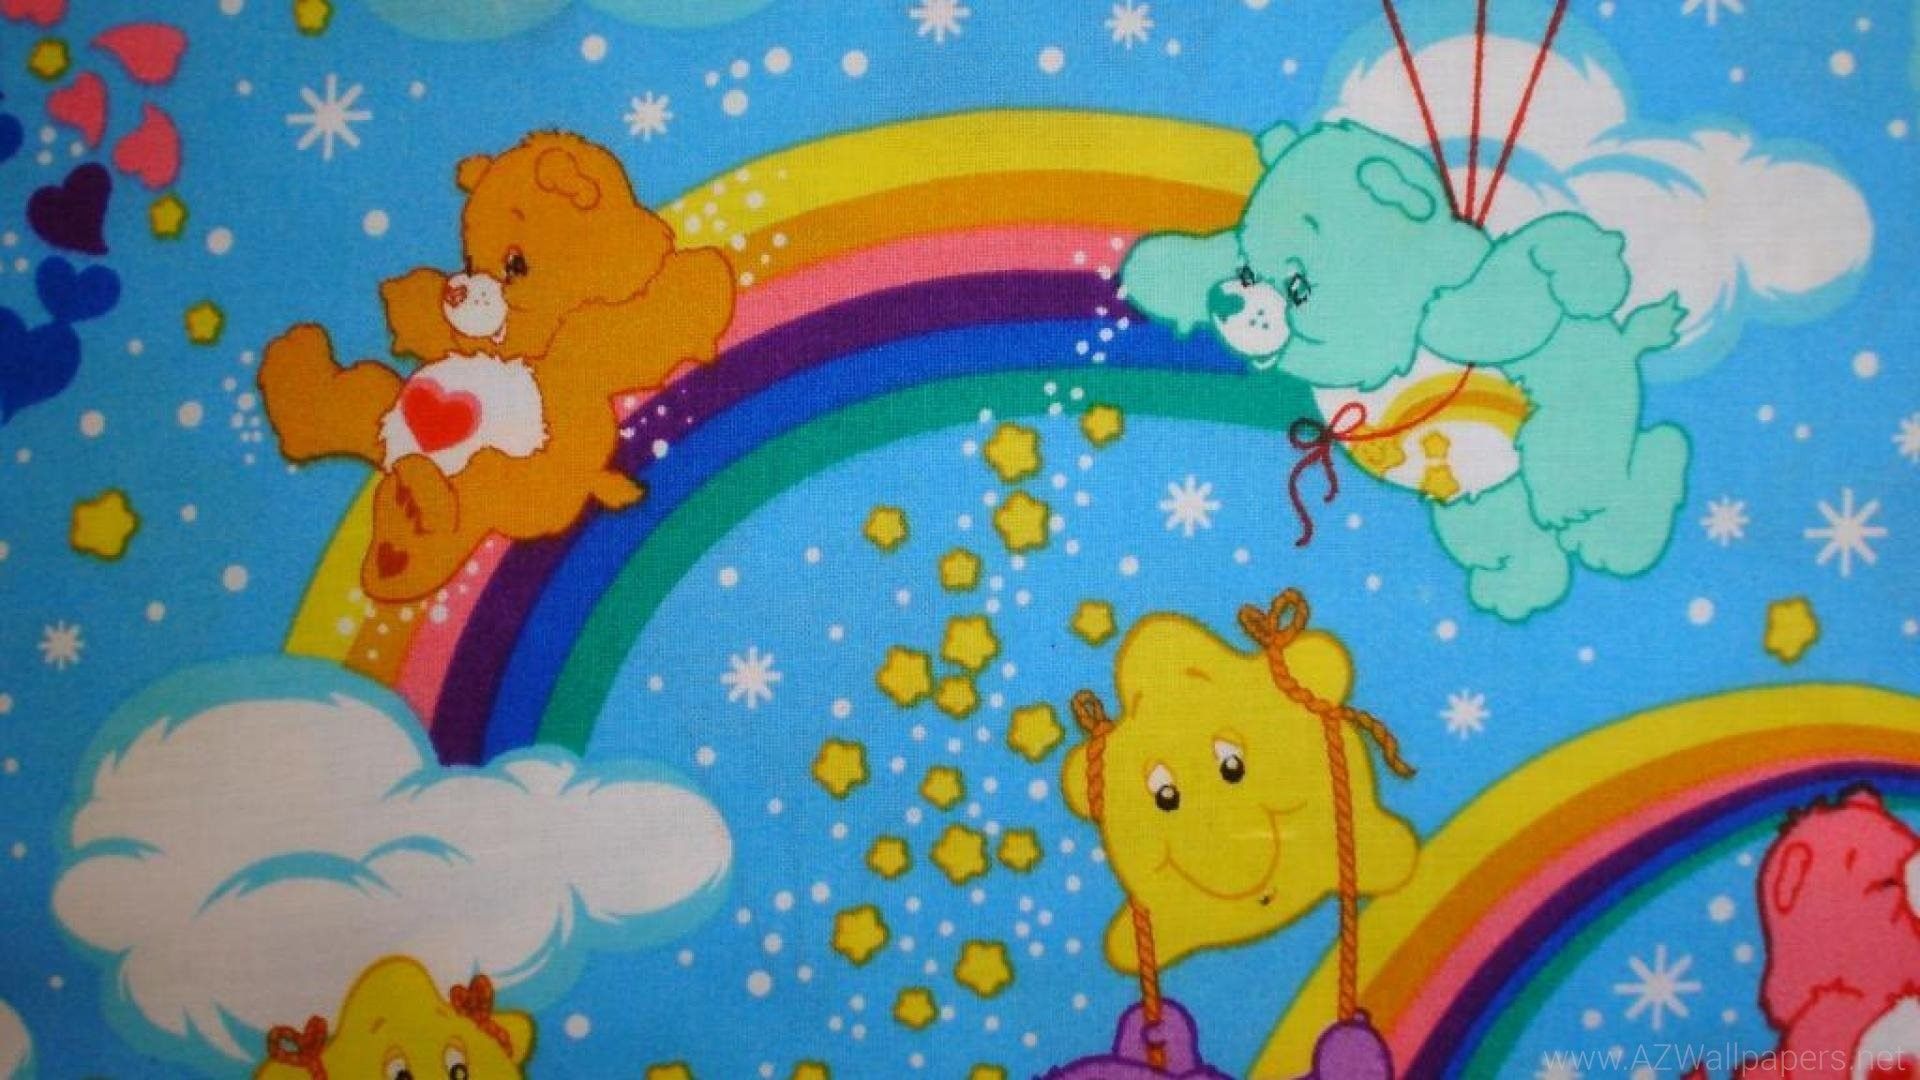 Care bears rainbow clouds fabric - Care Bears